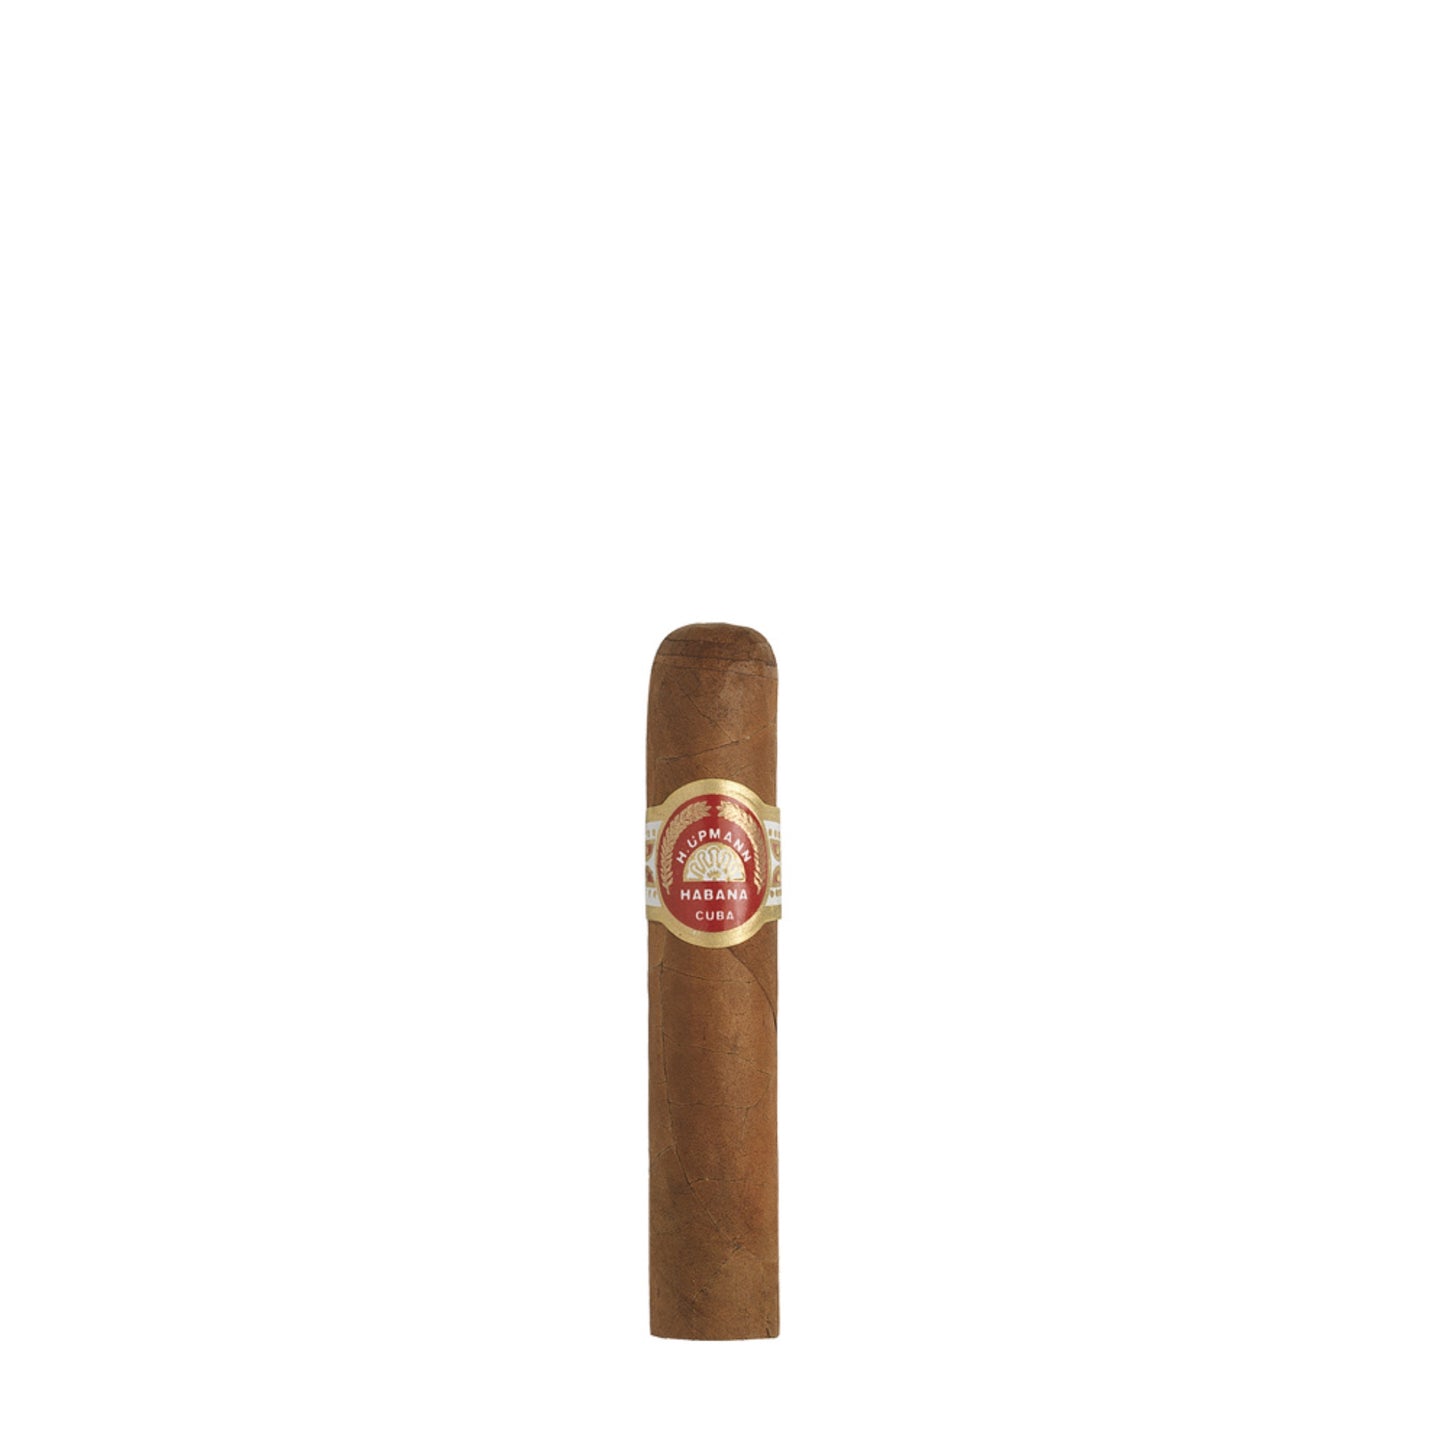 H Upmann half corona cigar